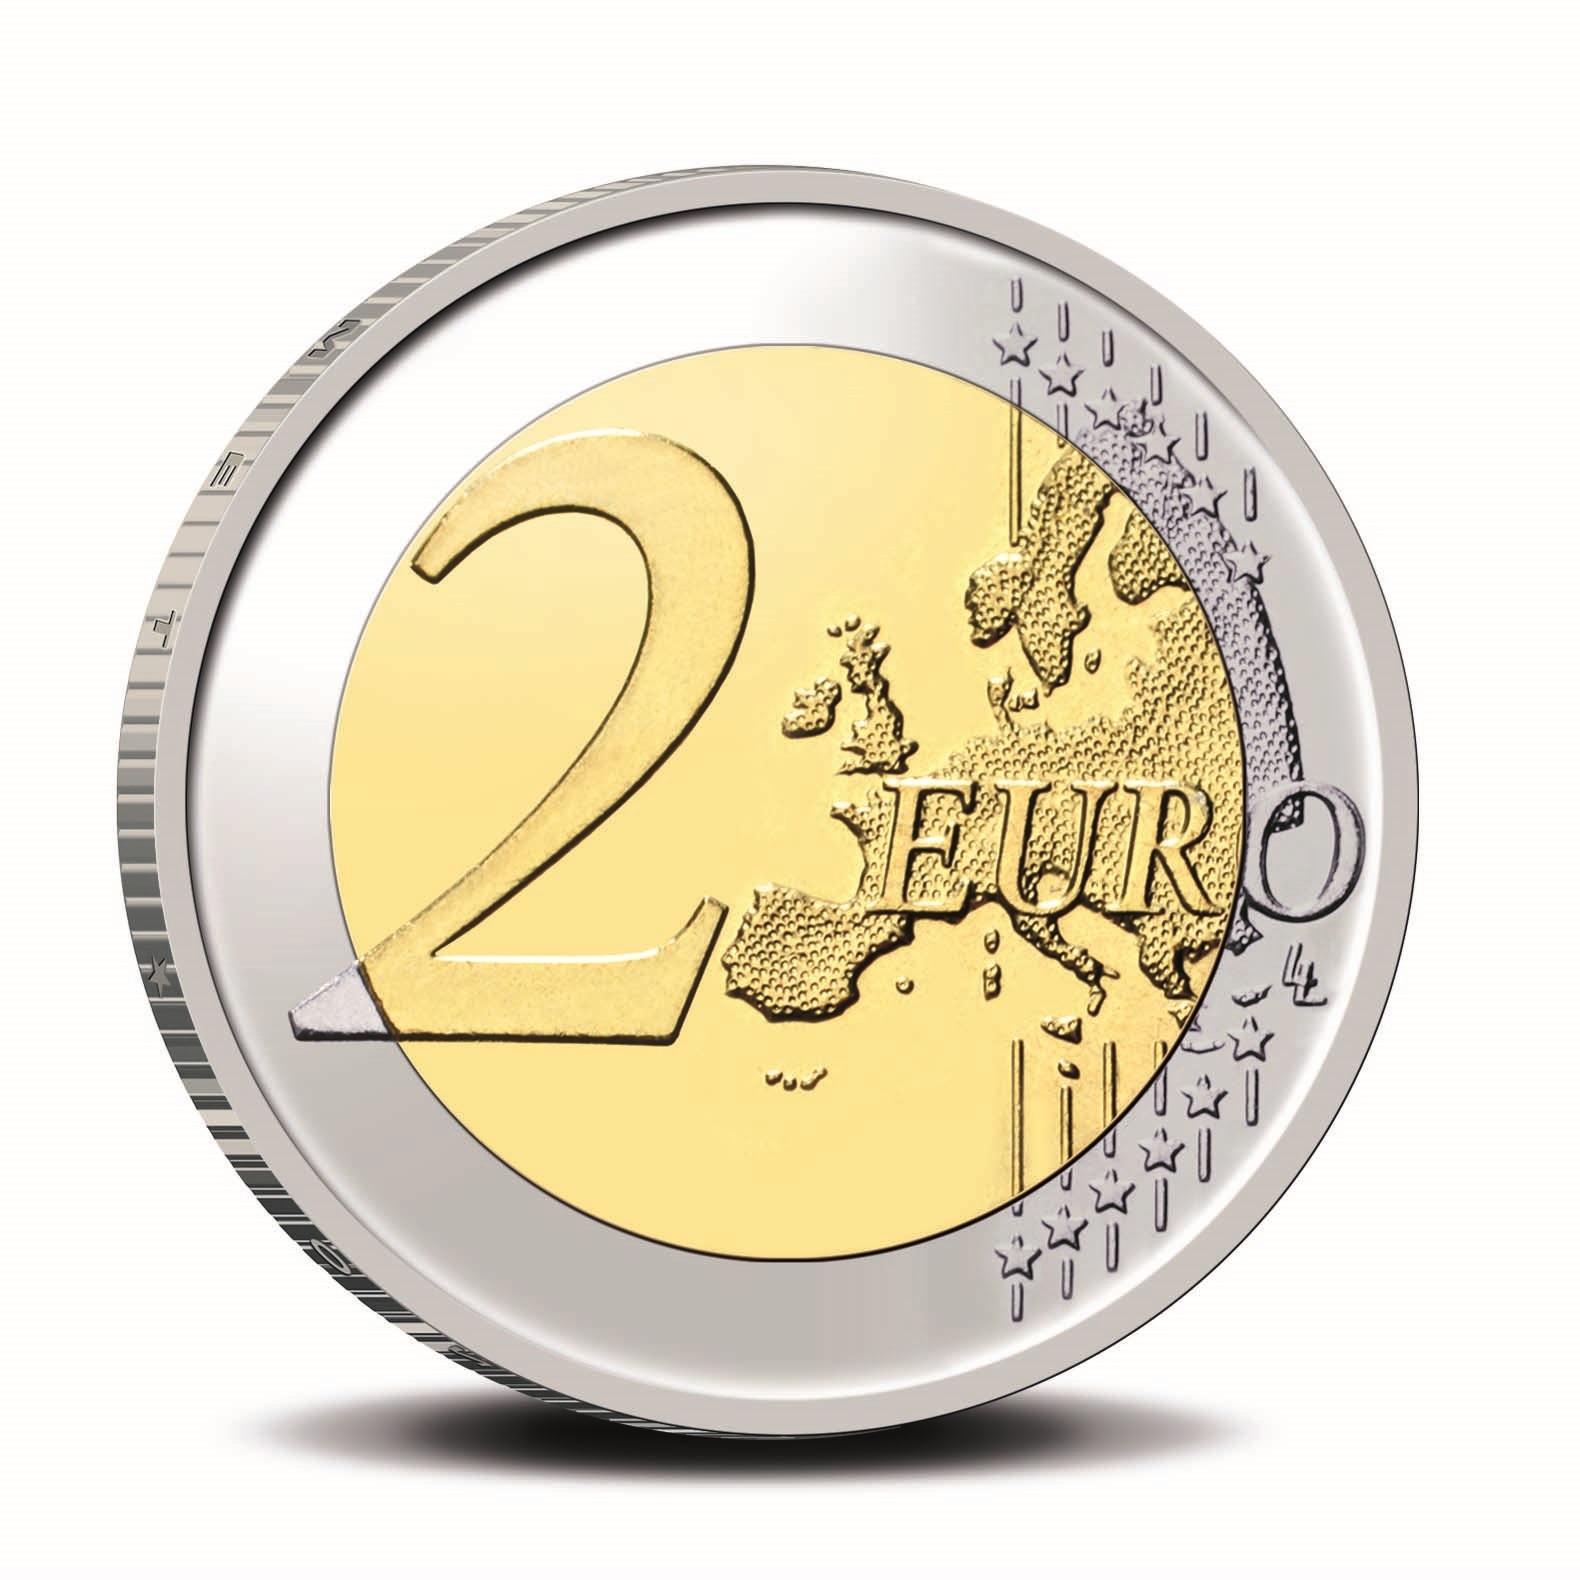 (EUR14.BU.2022.0114177) 2 euro Netherlands 2022 BU - Erasmus Programme Reverse (zoom)